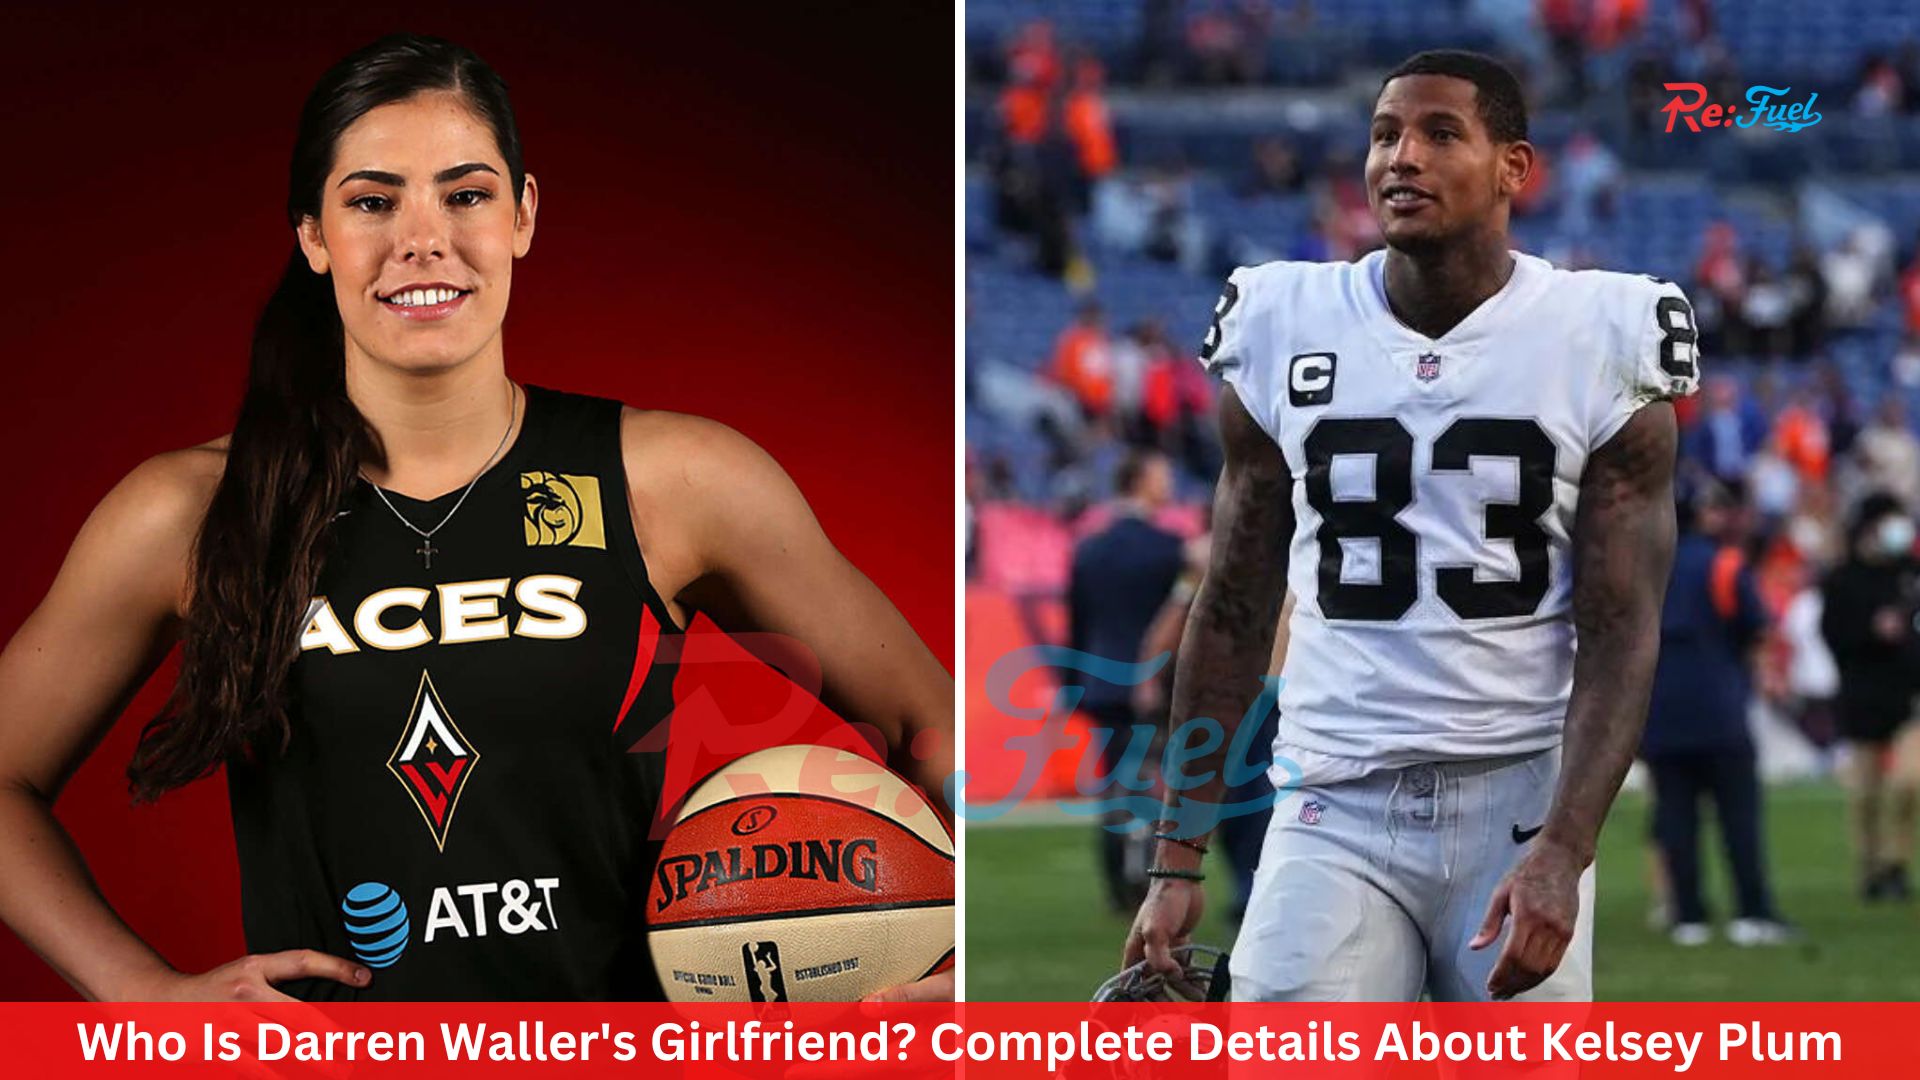 Who Is Darren Waller's Girlfriend? Complete Details About Kelsey Plum